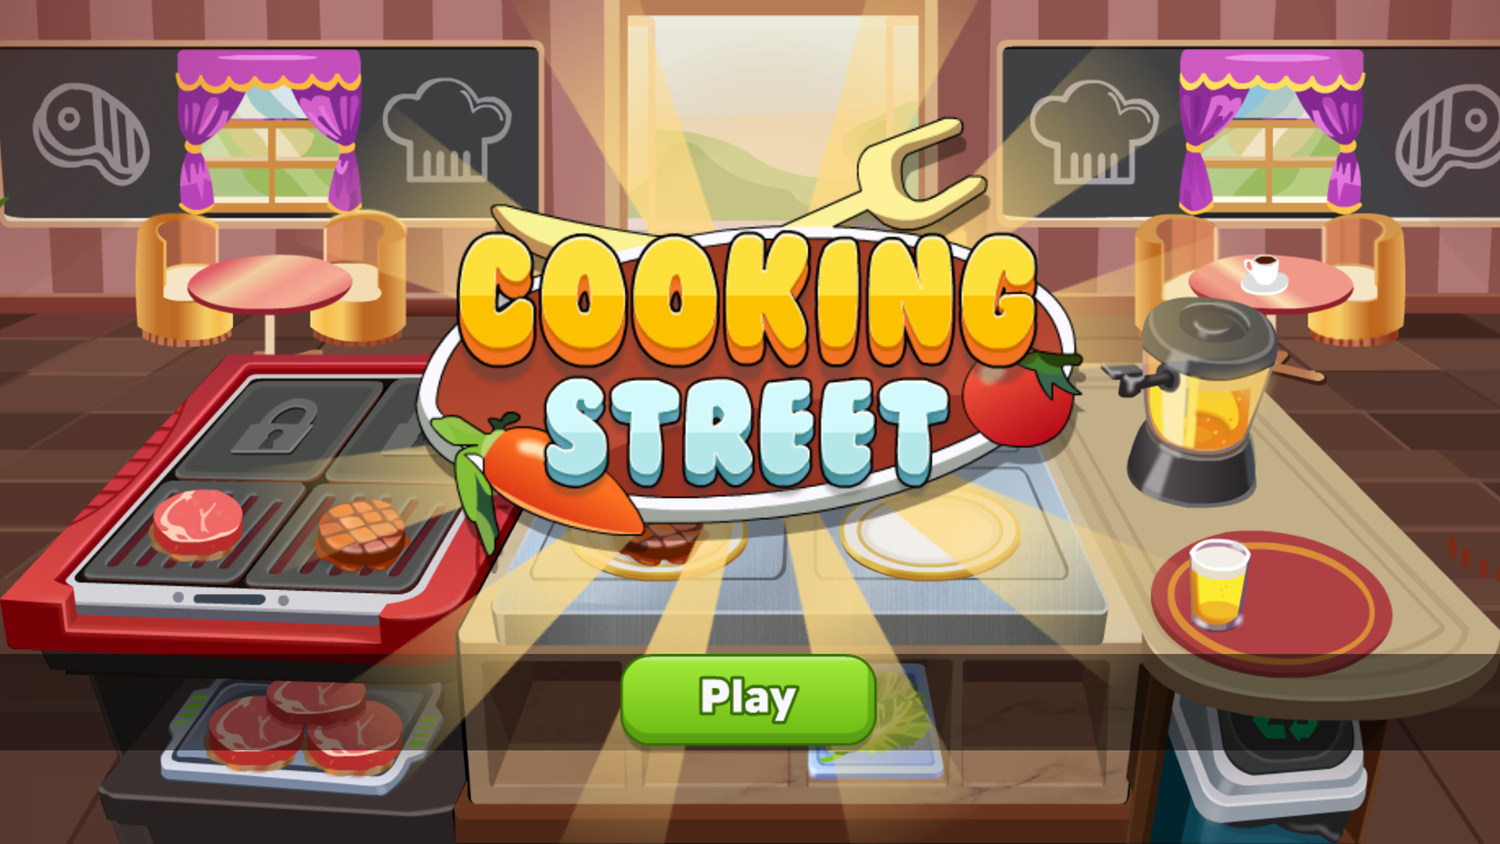 Cooking Street Game Welcome Screen Screenshot.